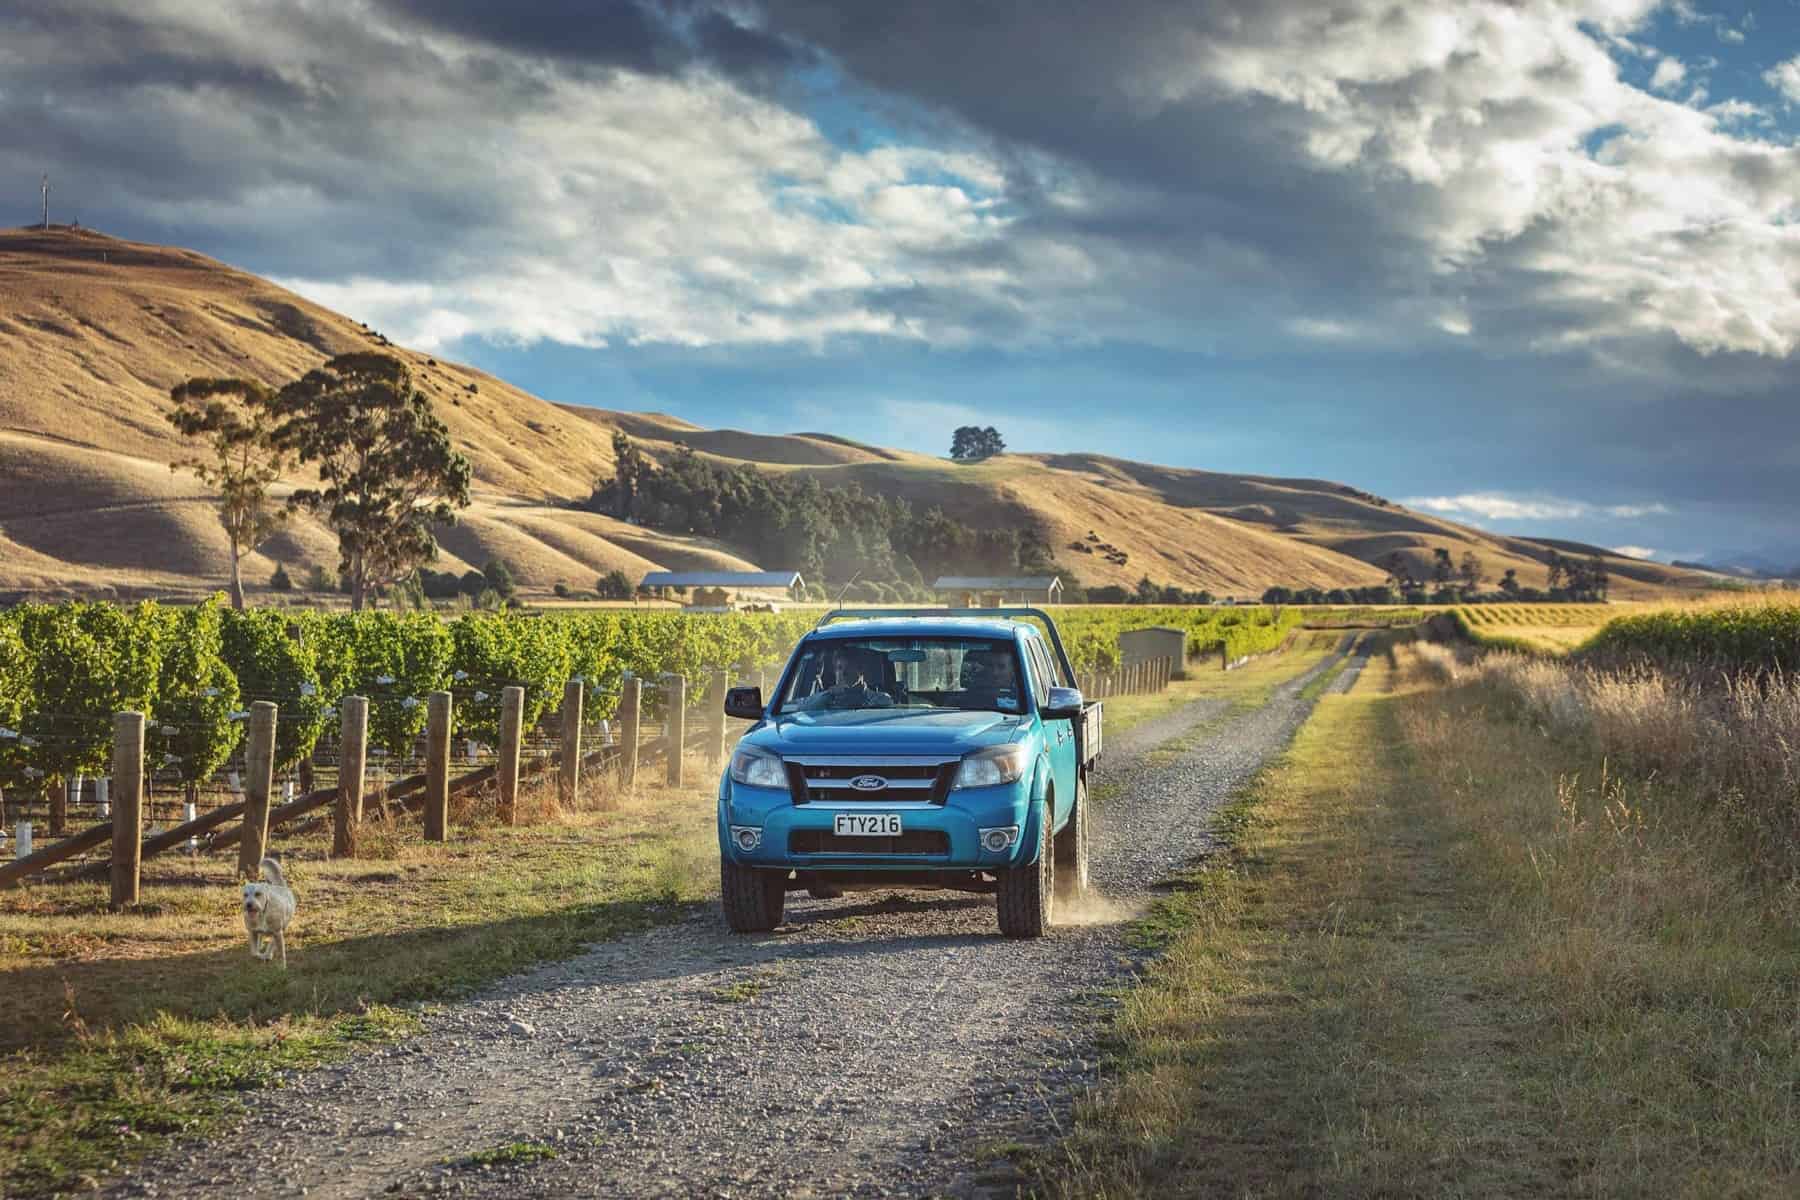 4W drive on gravel road in vineyard